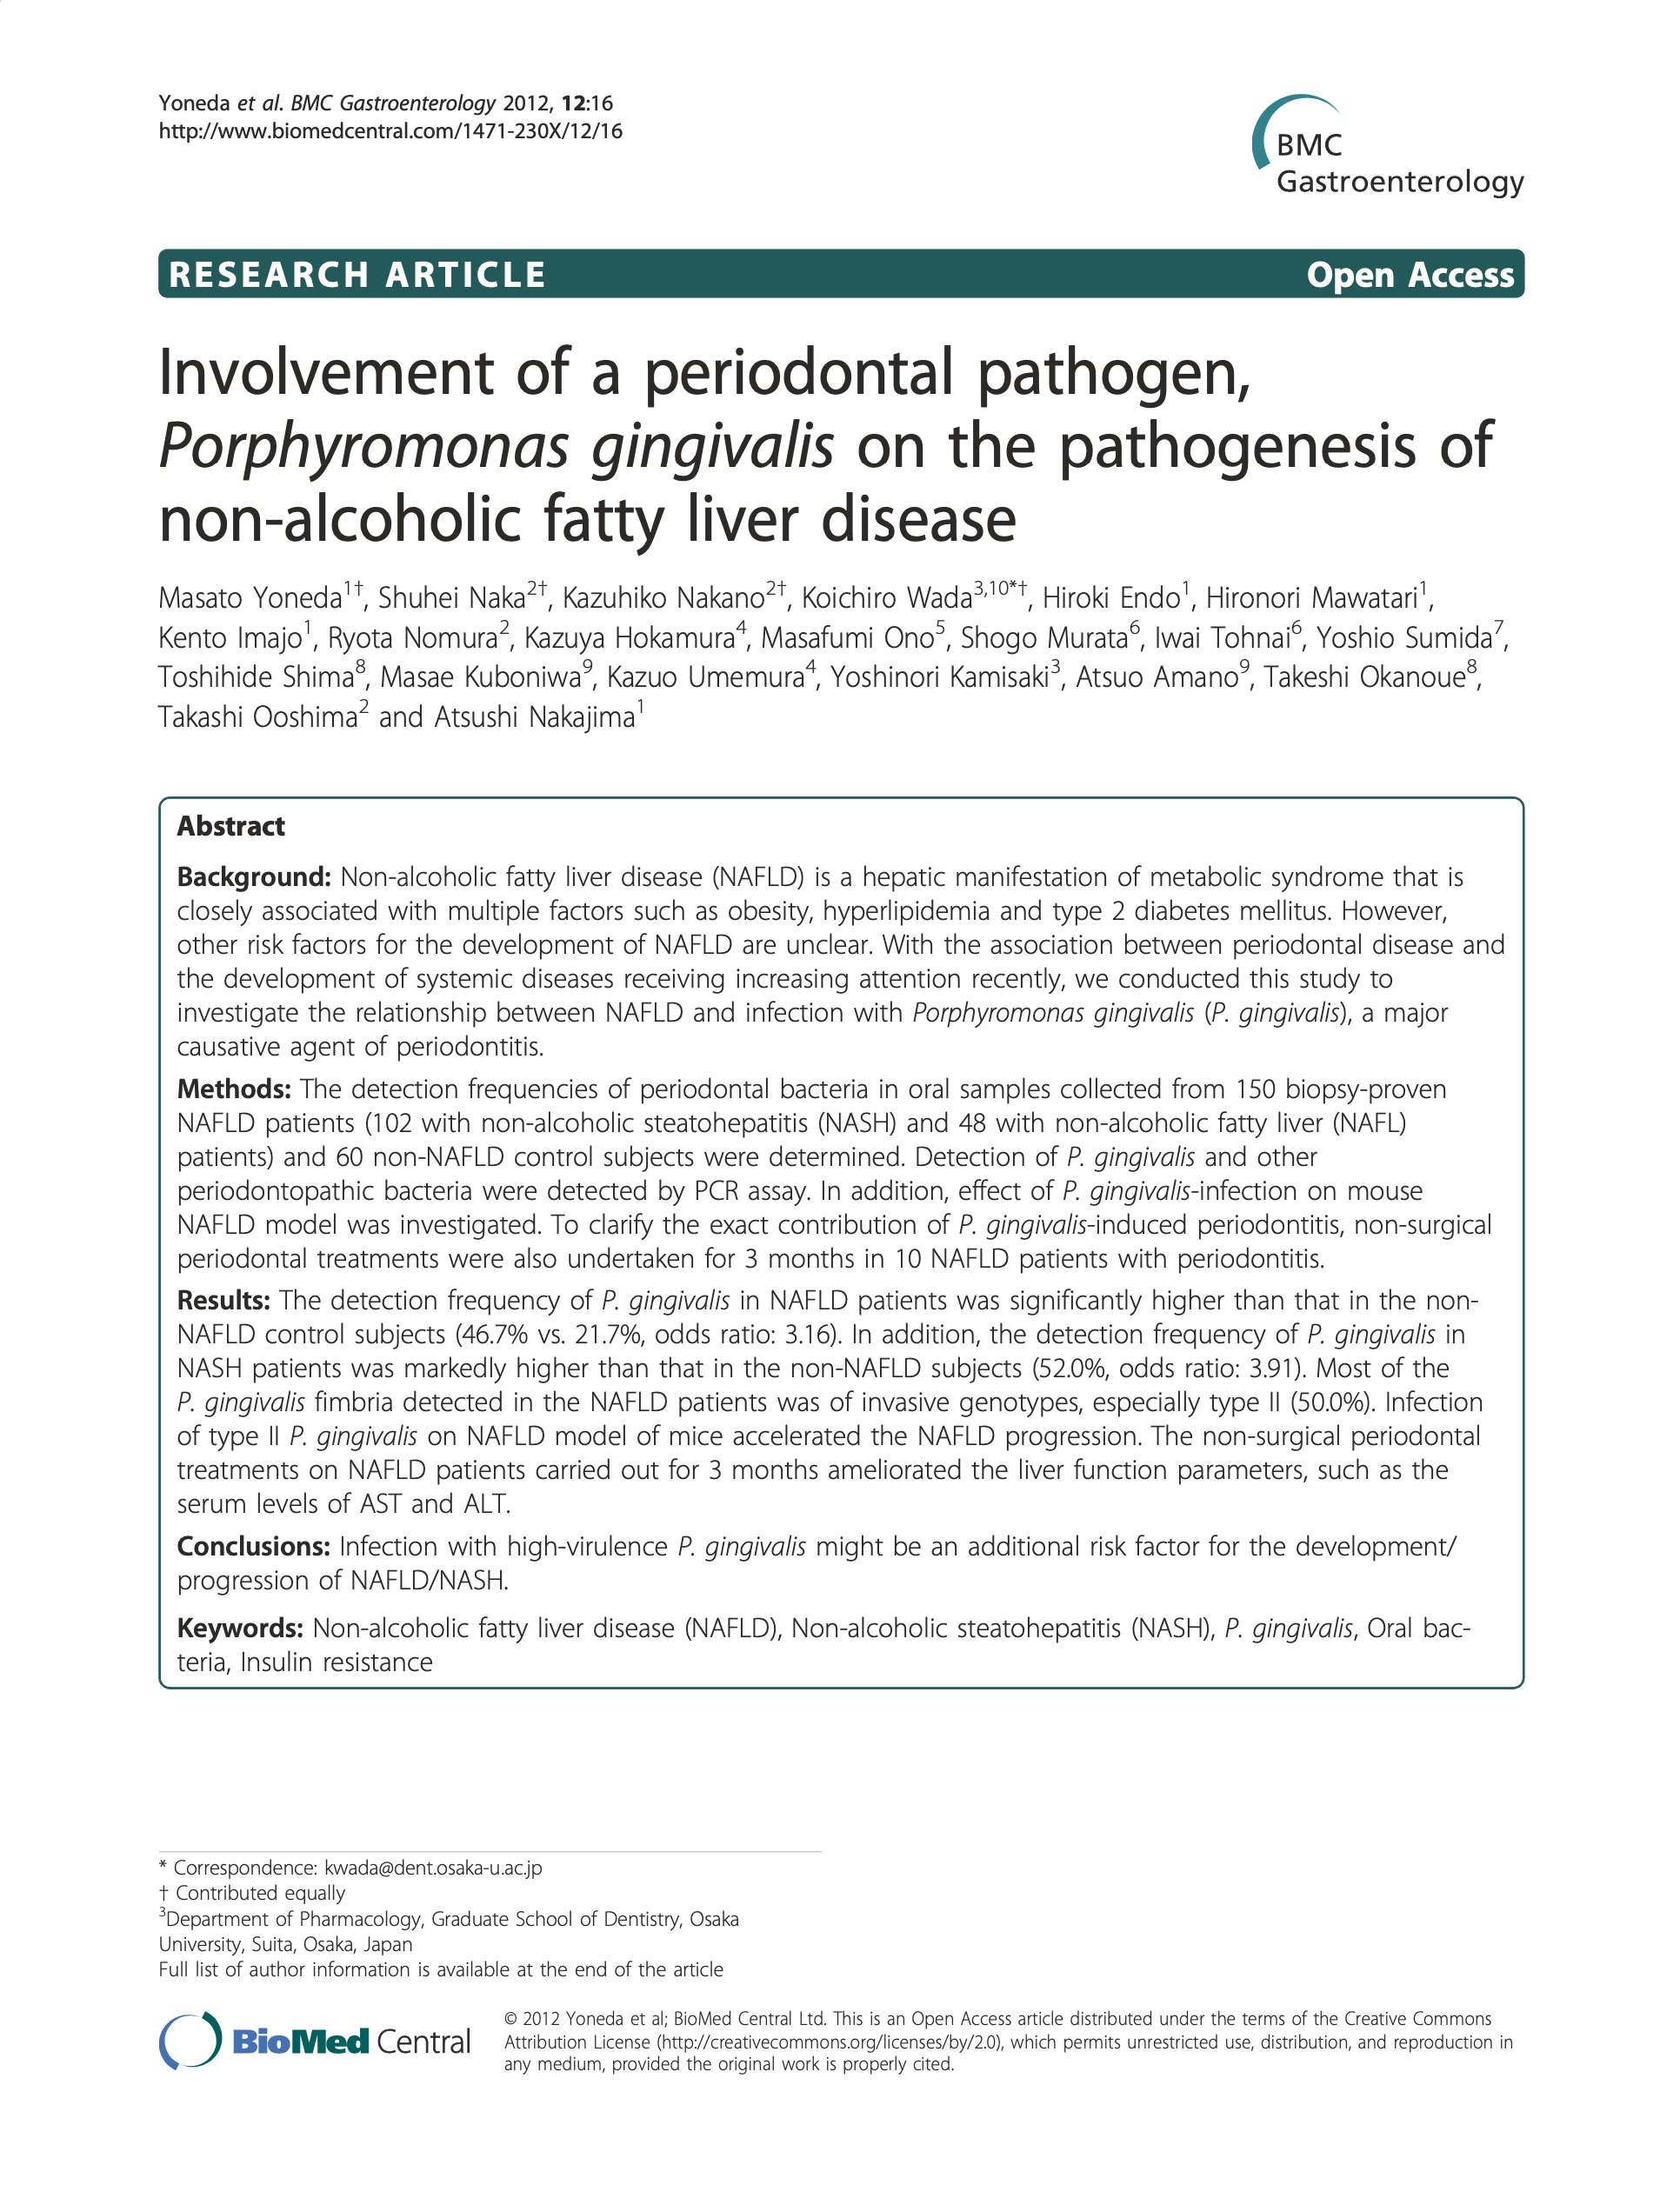 Involvement of a periodontal pathogen, Porphyromonas gingivalis on the pathogenesis of non-alcoholic fatty liver disease